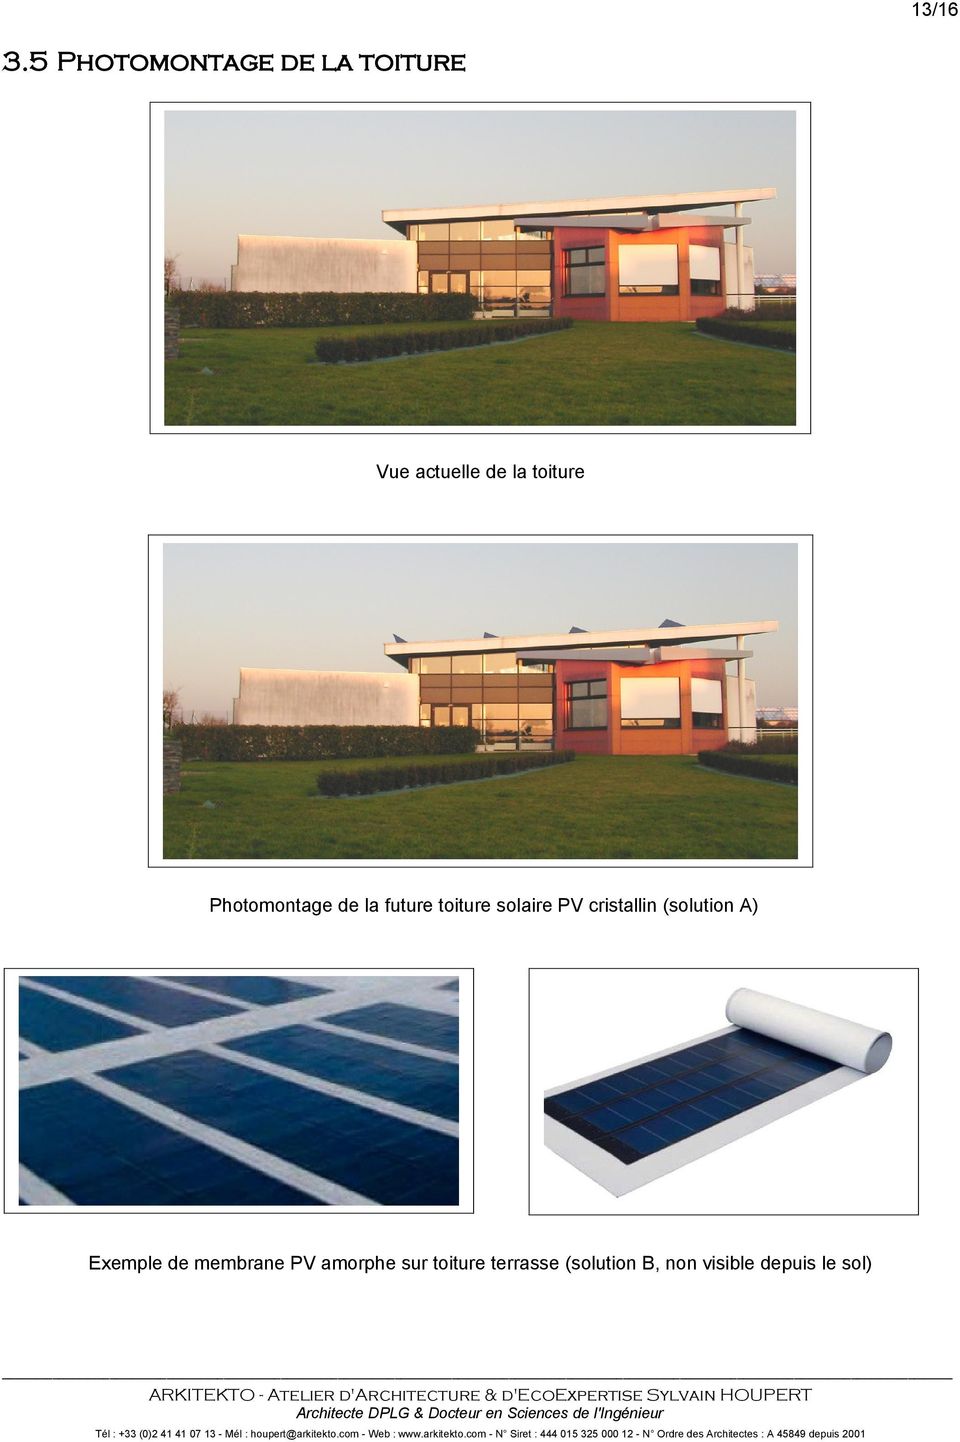 Photomontage de la future toiture solaire PV cristallin